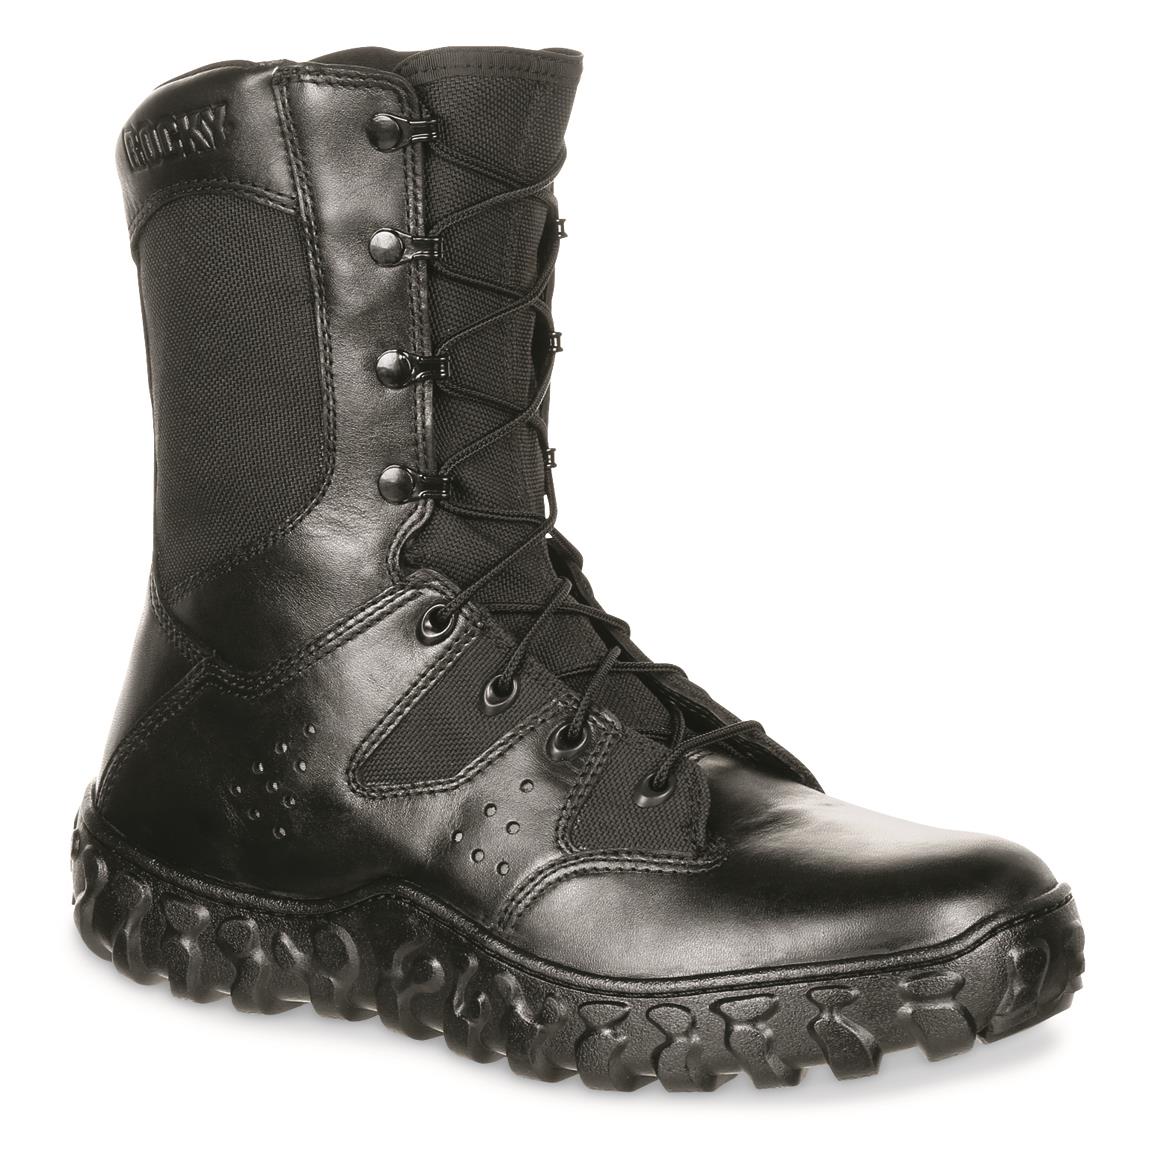 Buy > rockies tactical boots > in stock